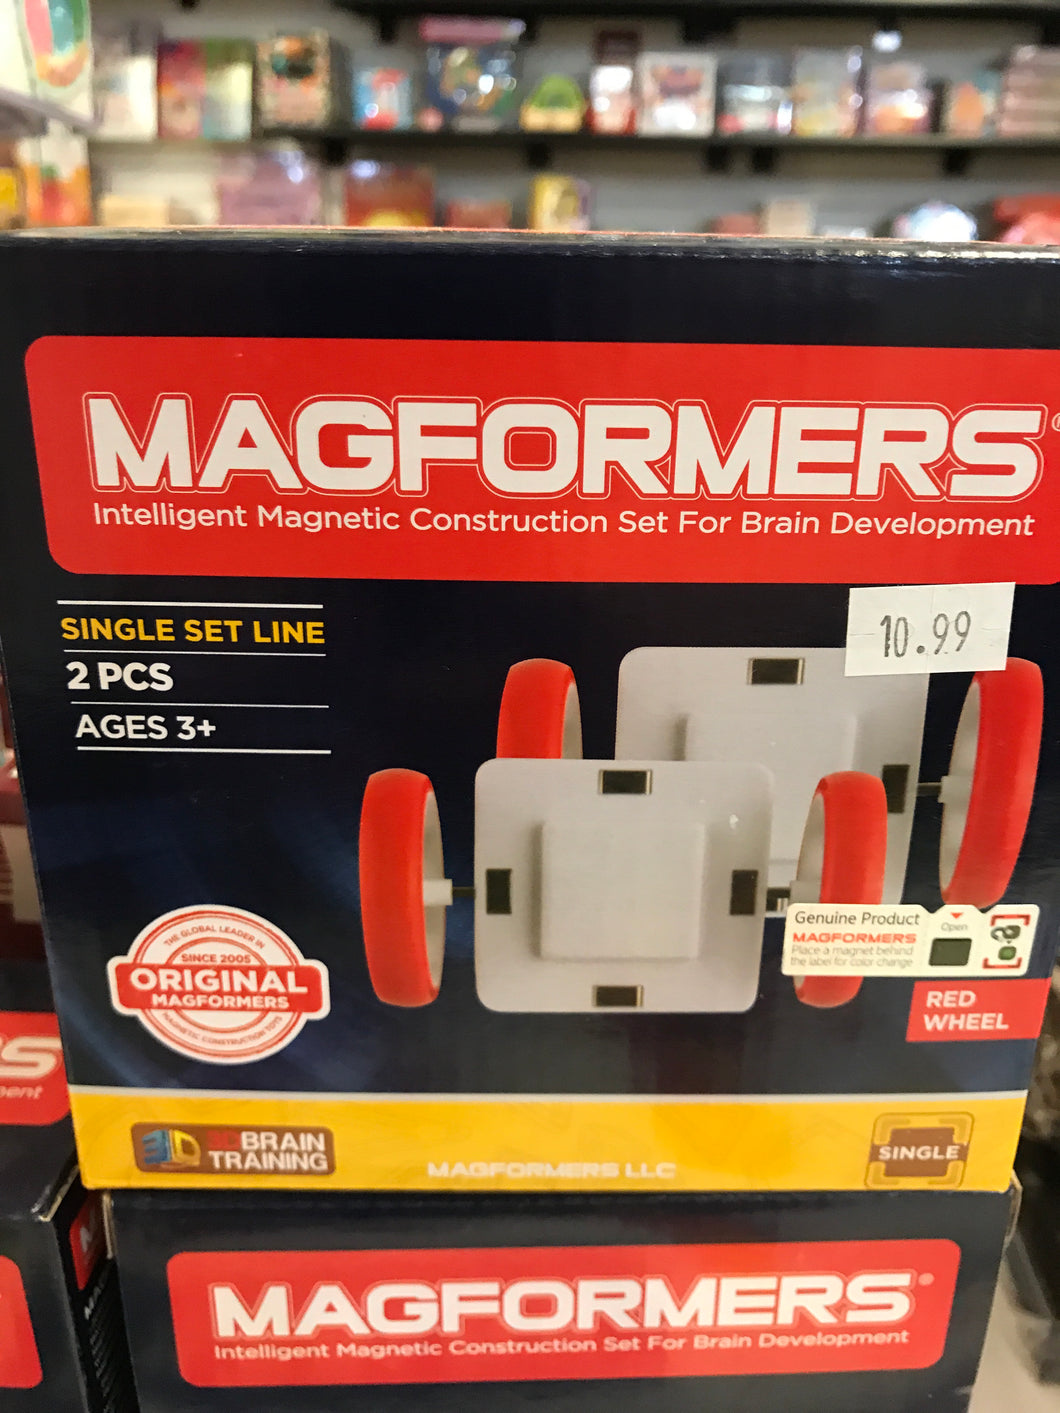 Magformers - Red Wheel Single set (2pc)